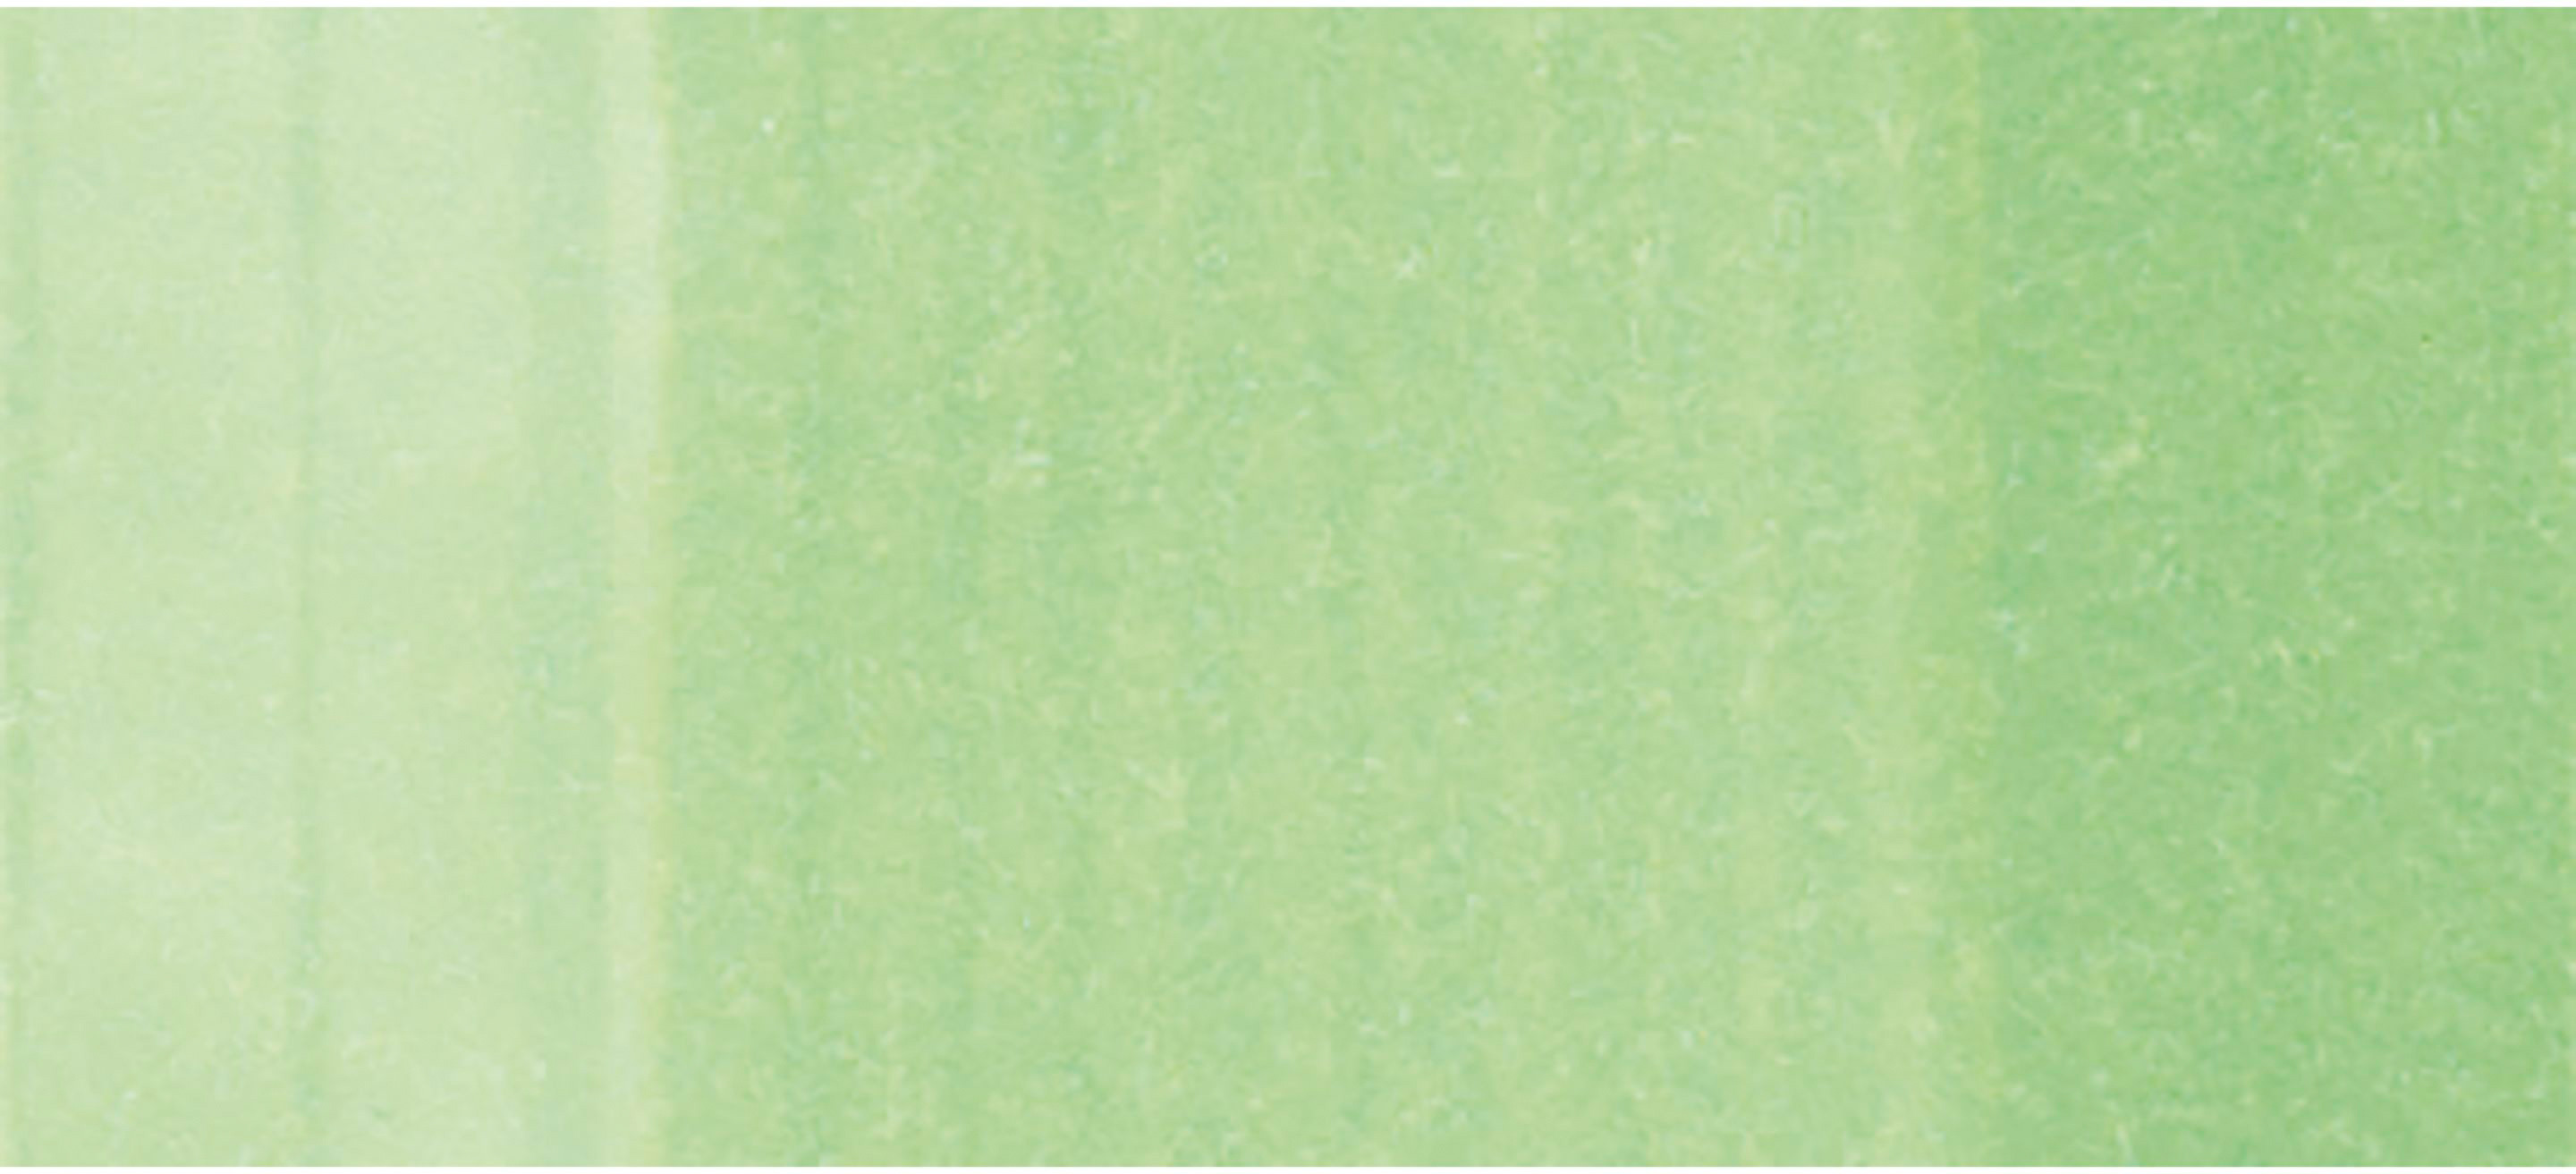 COPIC Marker Sketch 21075202 YG41 - Pale Cobalt Green